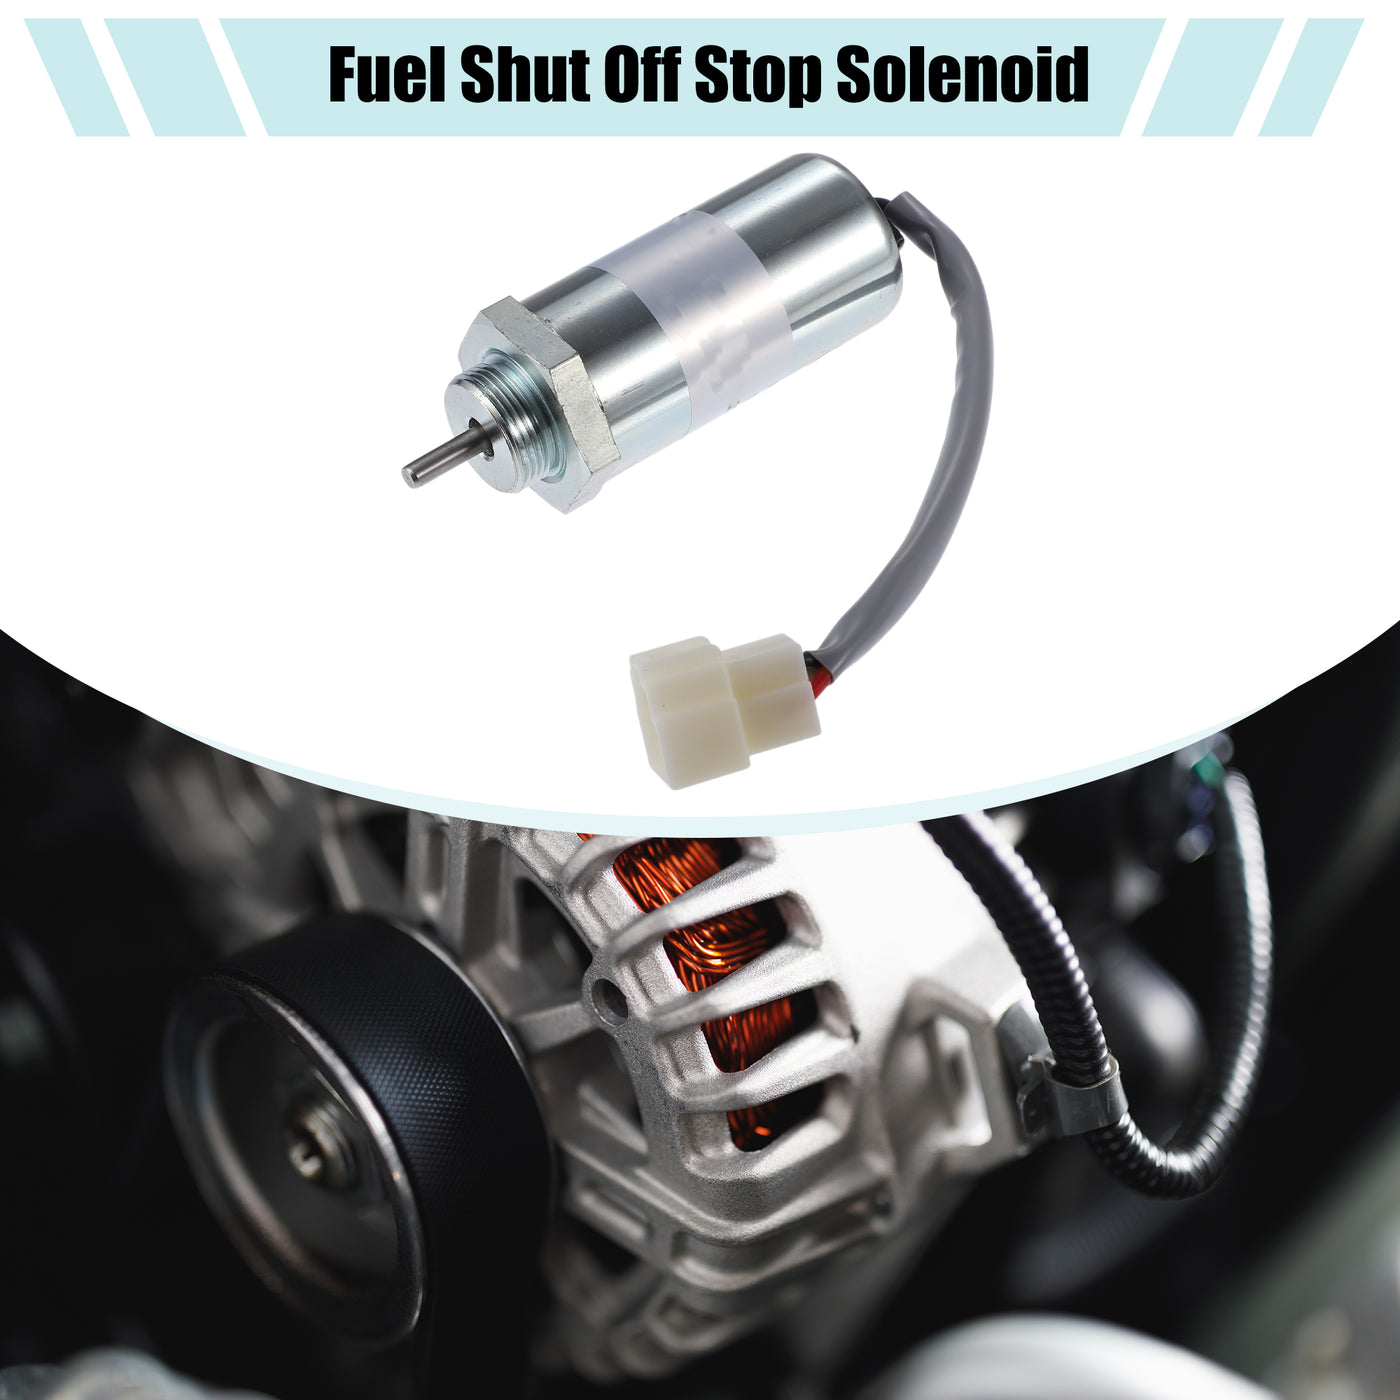 ACROPIX Fuel Shut Off Stop Solenoid Valve 897329-5680/897183-0140 Fit for Isuzu Engines 3LD1 3LD2 - Pack of 1 Silver Tone